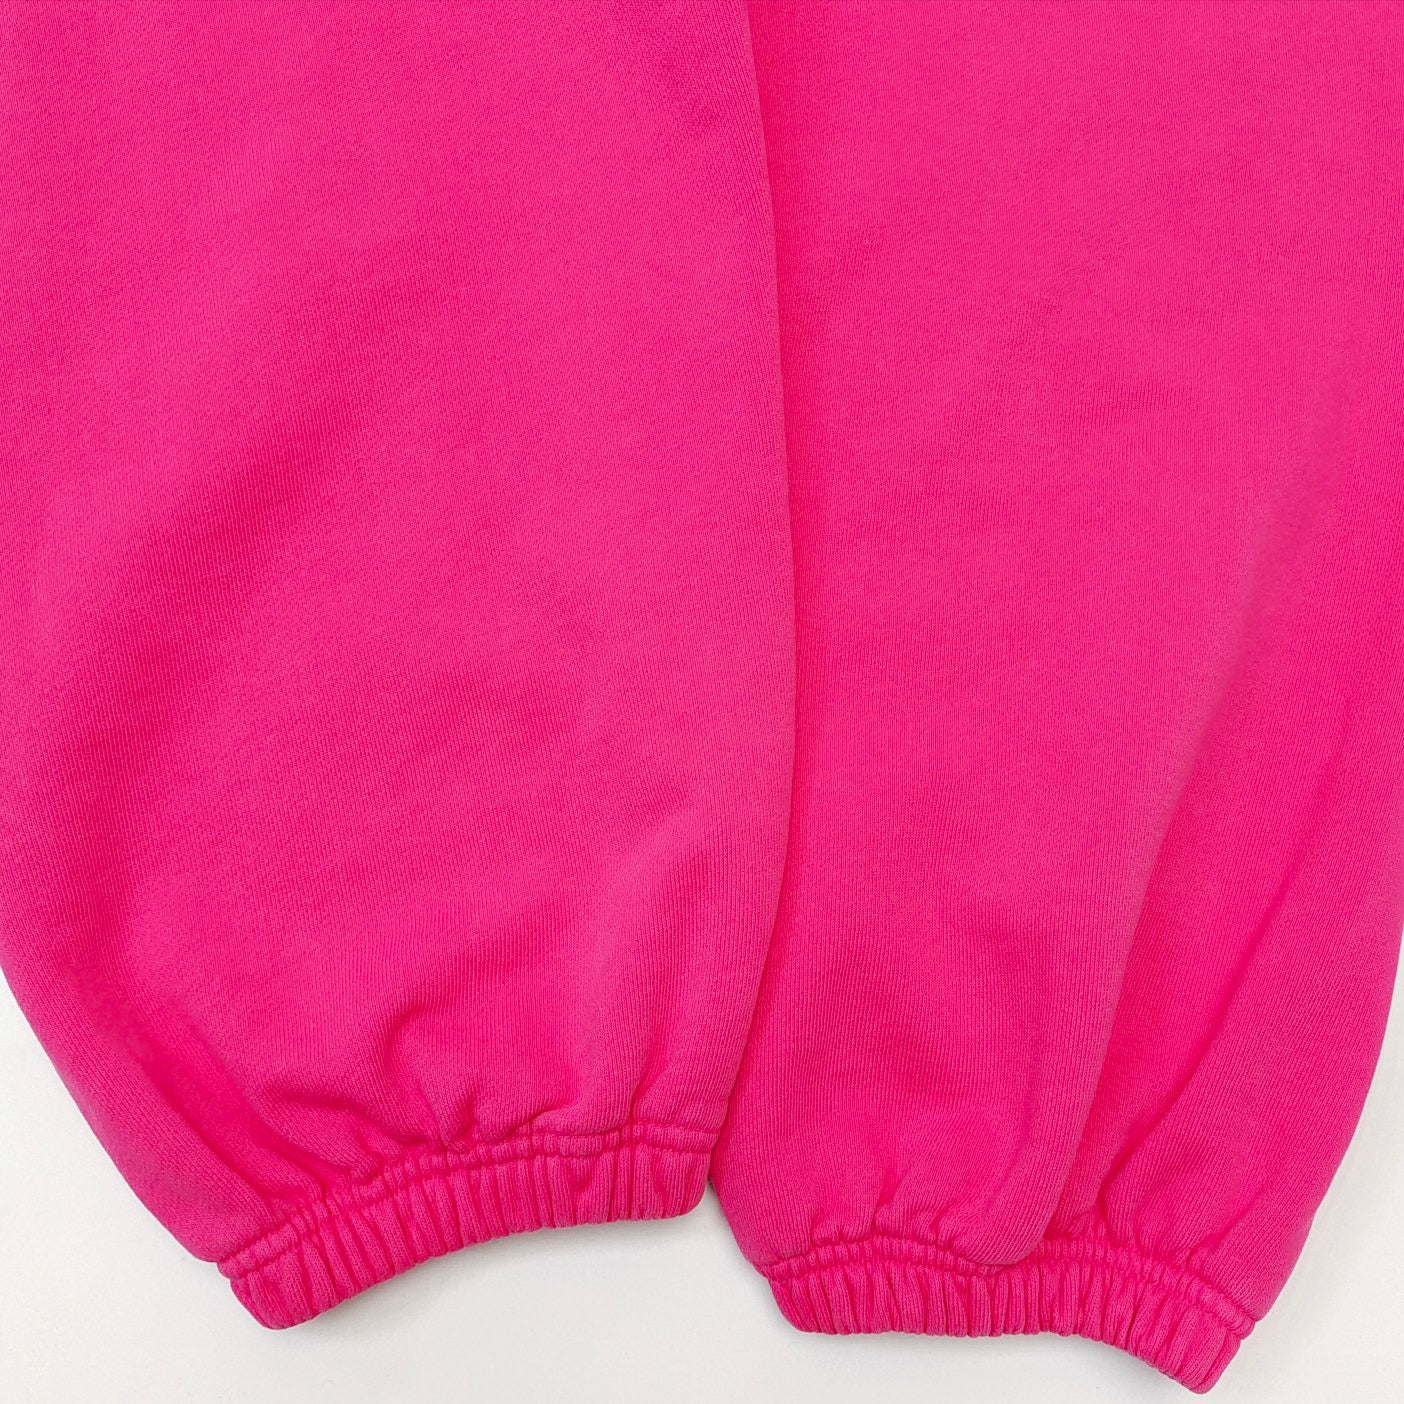 Pink Pant